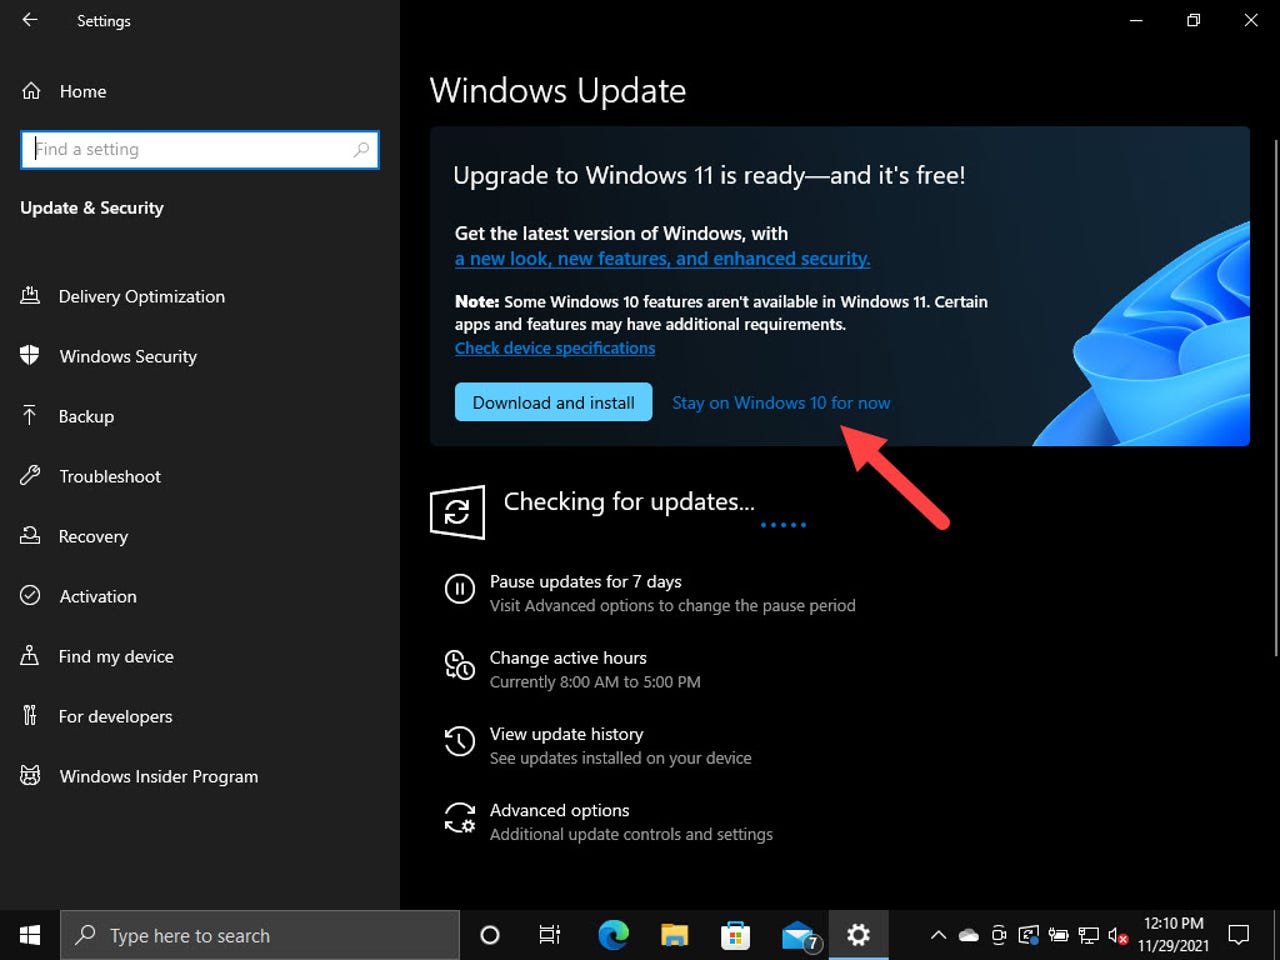 Windows 11 Upgrade Release Date - Get Latest Windows 11 Update